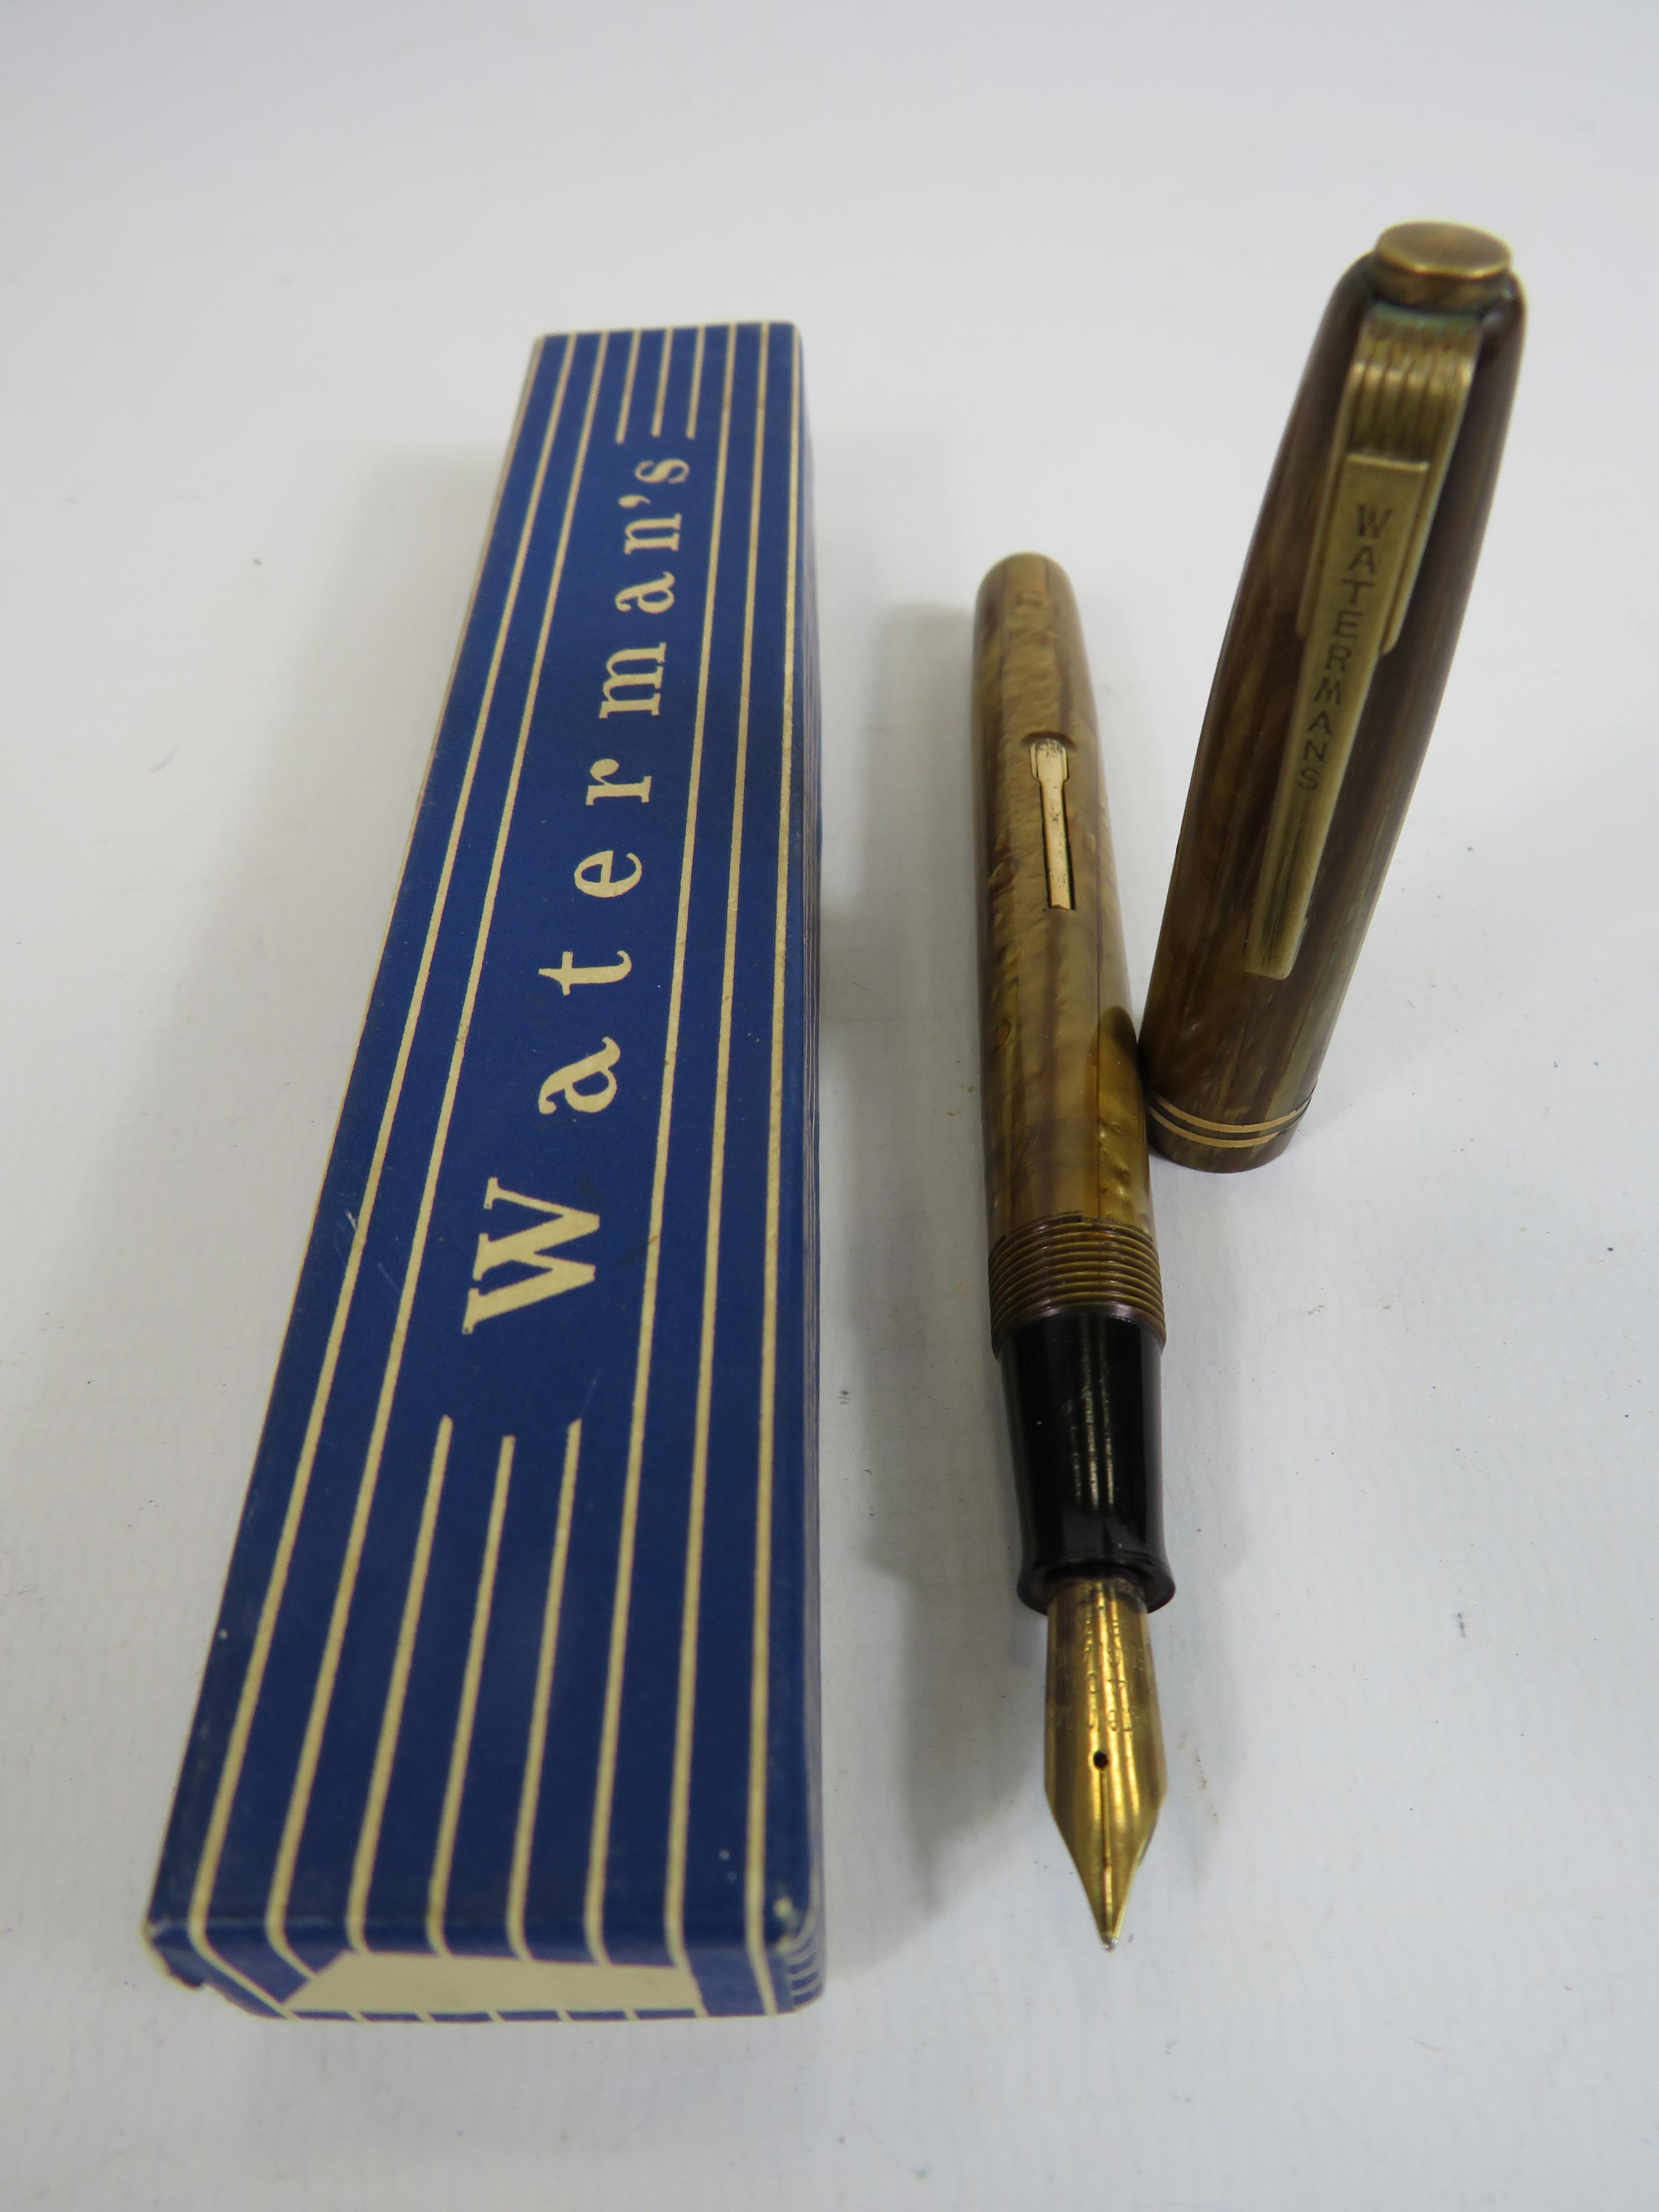 Vintage Watermans 503 fountain pen 14k gold nib and original box.